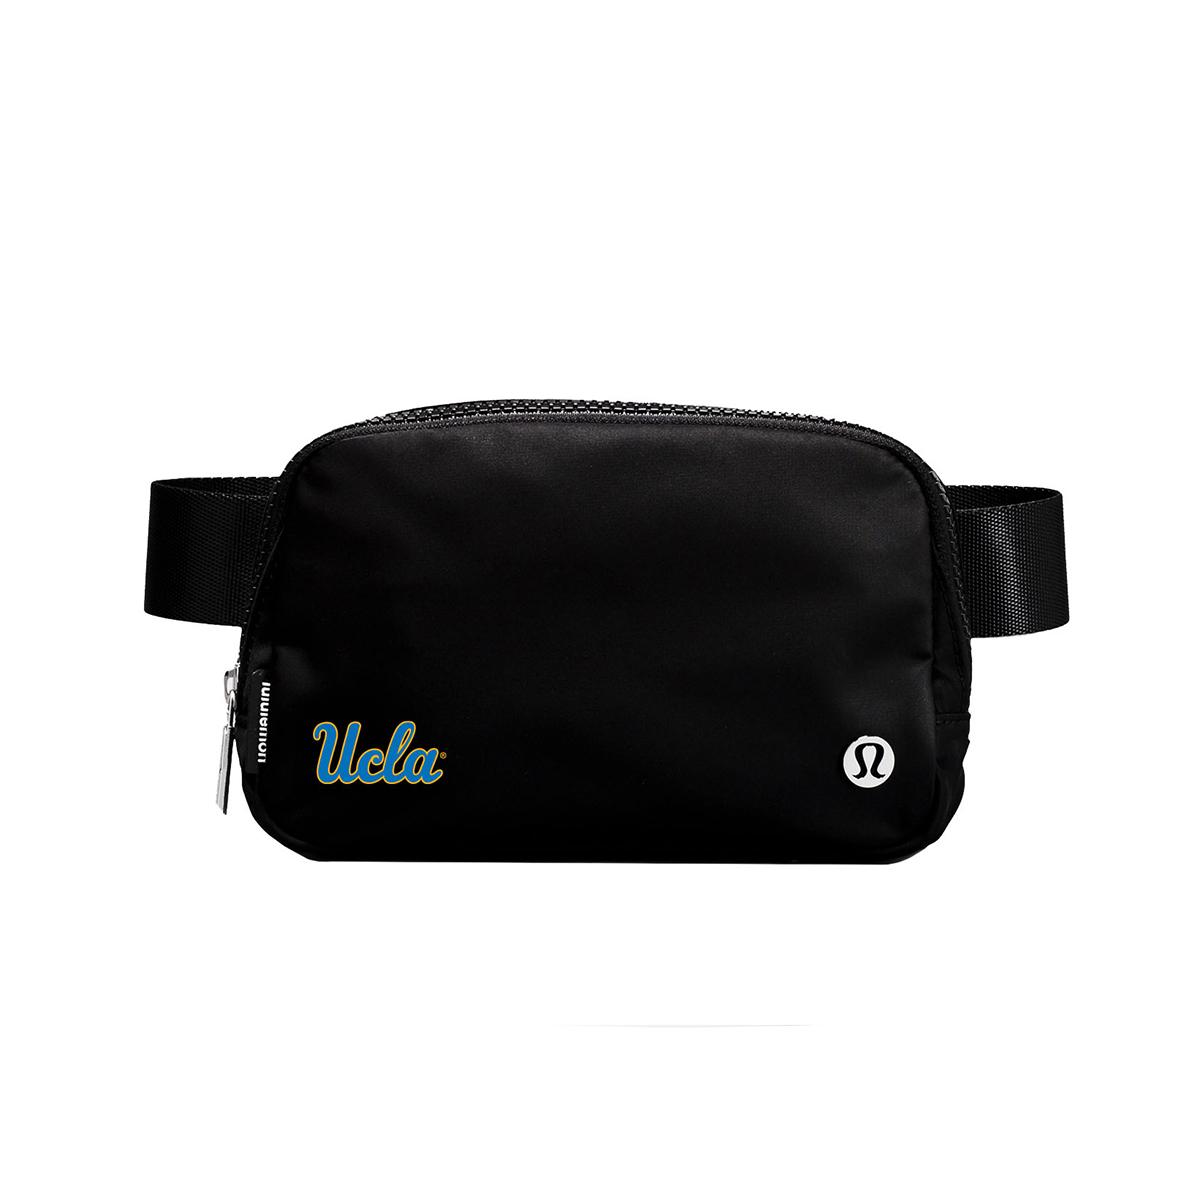 UCLA Everywhere Belt Bag - Black